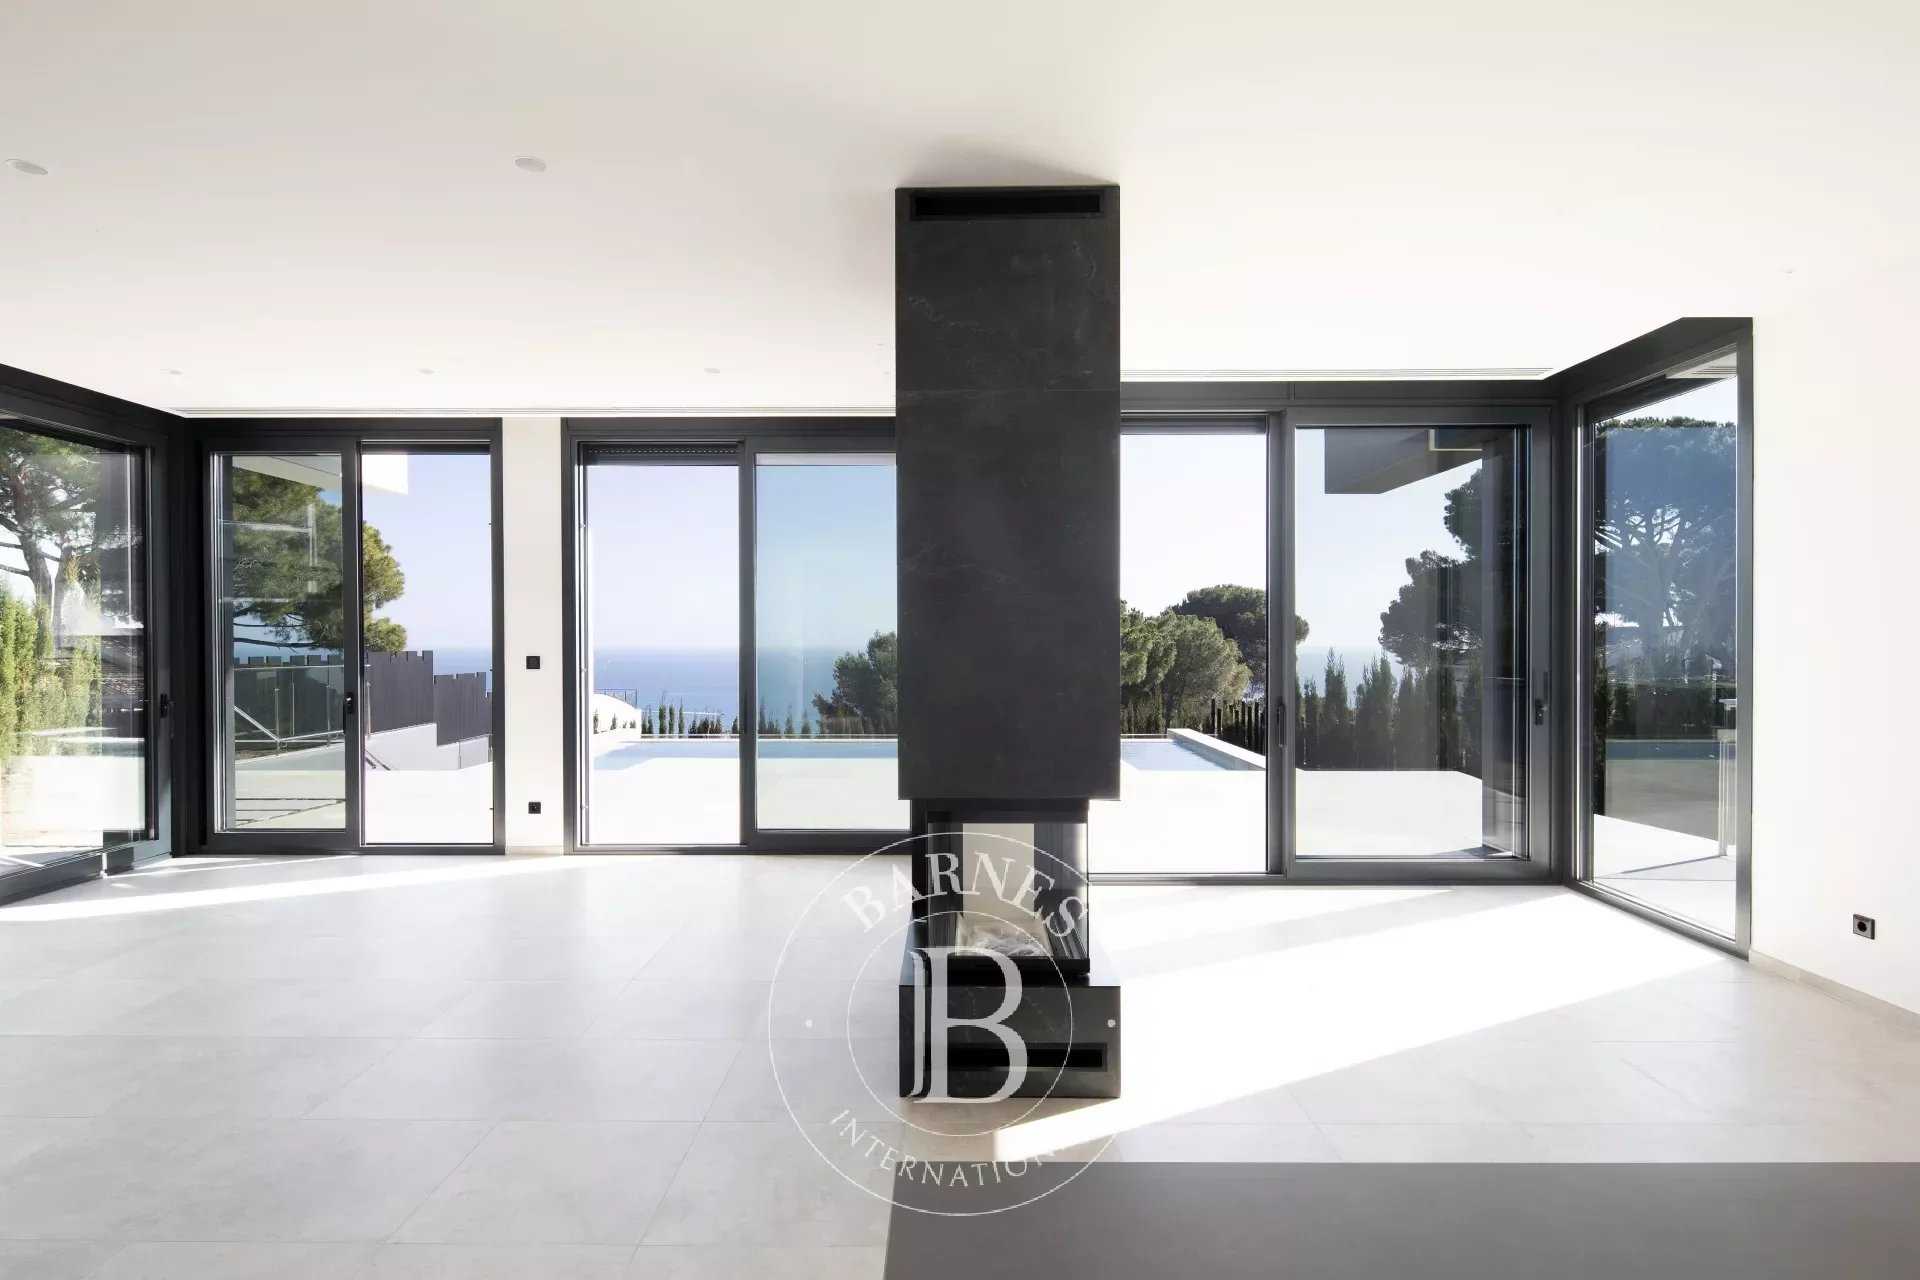 Preciosa villa de obra nueva en venta en Caldes d'Estrac, Barcelona. Caldes d'Estrac  -  ref 84539381 (picture 1)